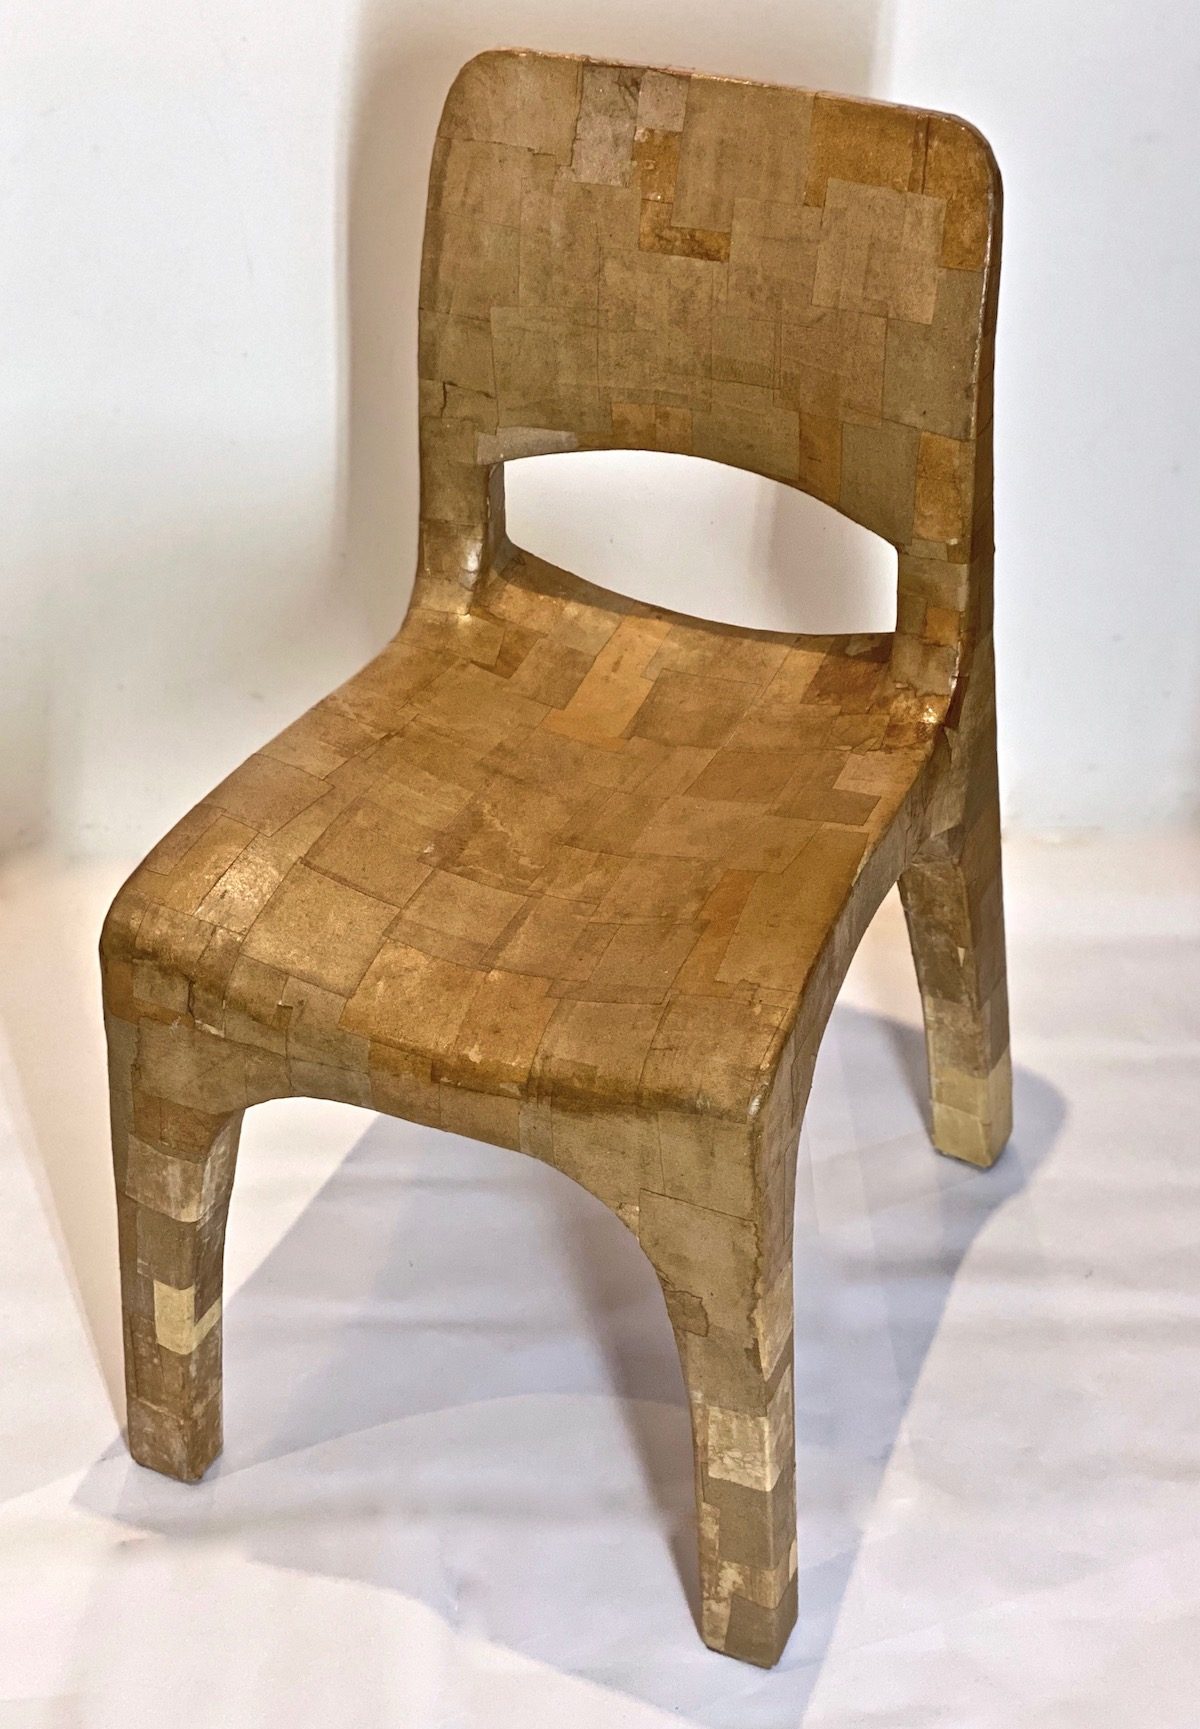 David Durance, Chairboard Cardboard Cafe Chair